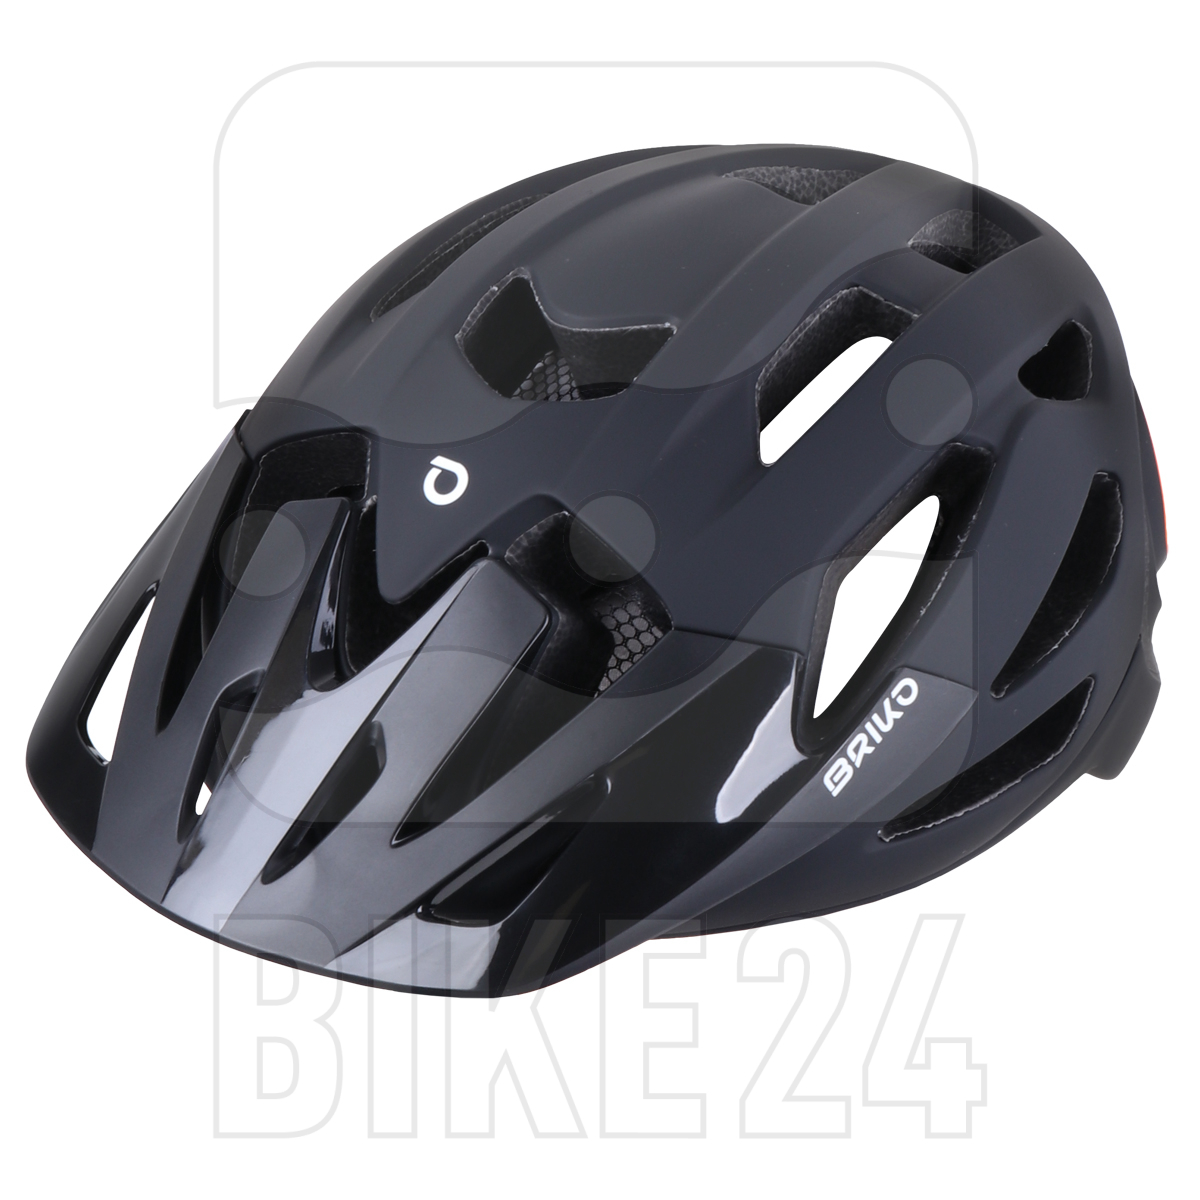 Productfoto van Briko Sismic NTA Helmet - matt black - black